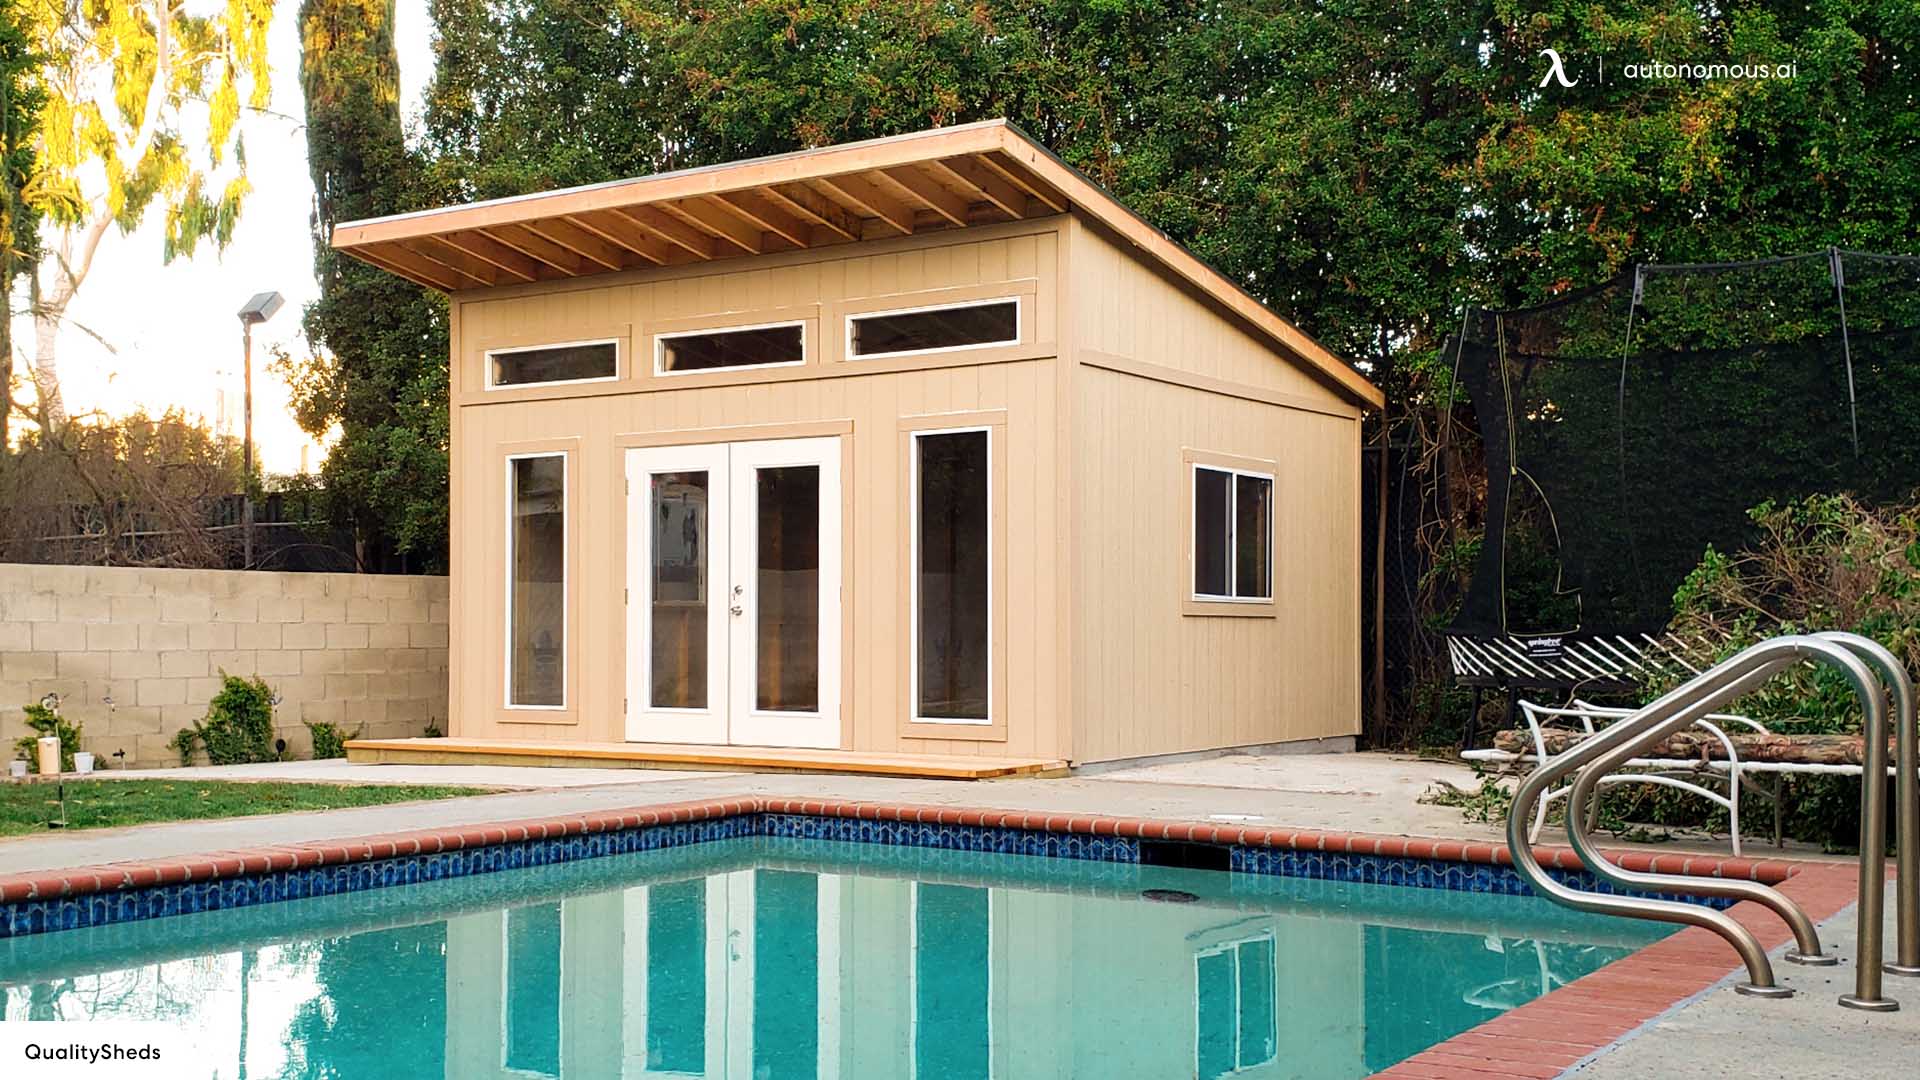 QualitySheds backyard office pod in california